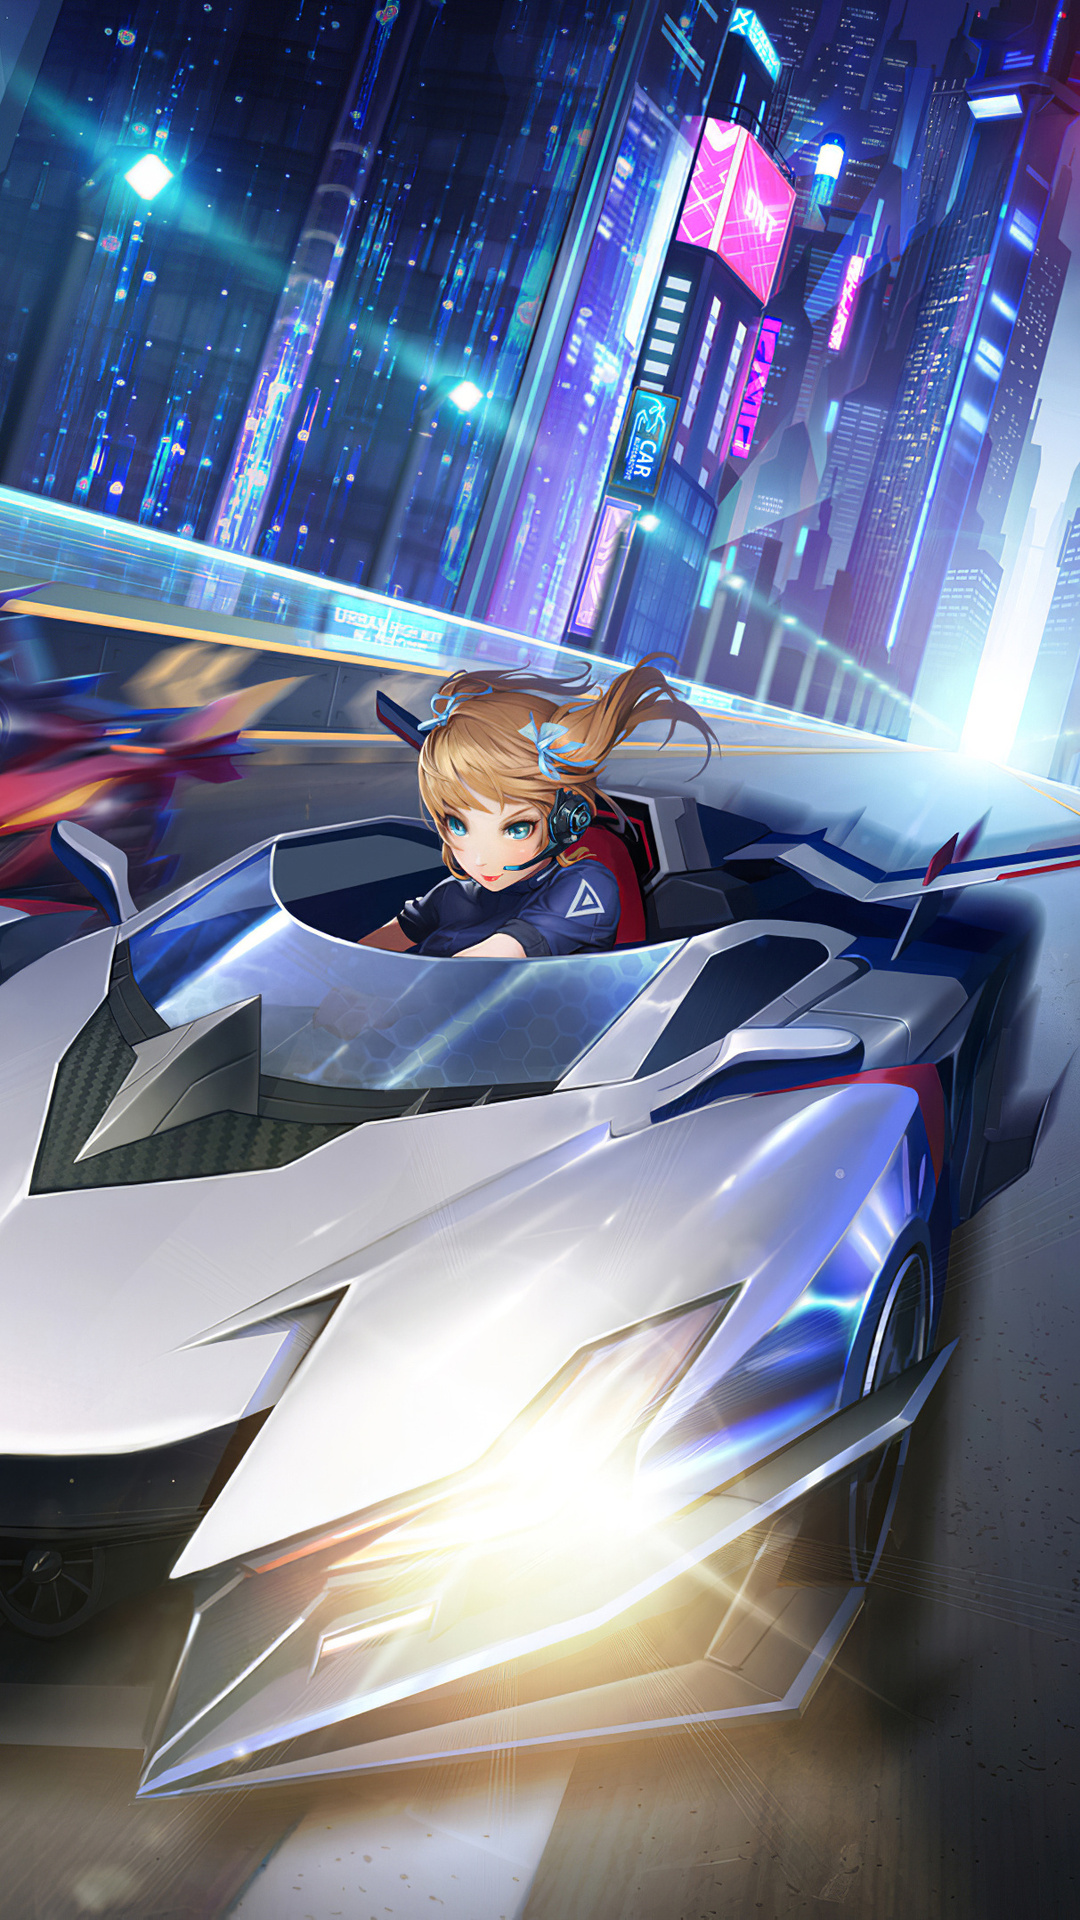 1080x1920 City Street Racing Anime 4k Iphone 7,6s,6 Plus, Pixel xl ,One ...